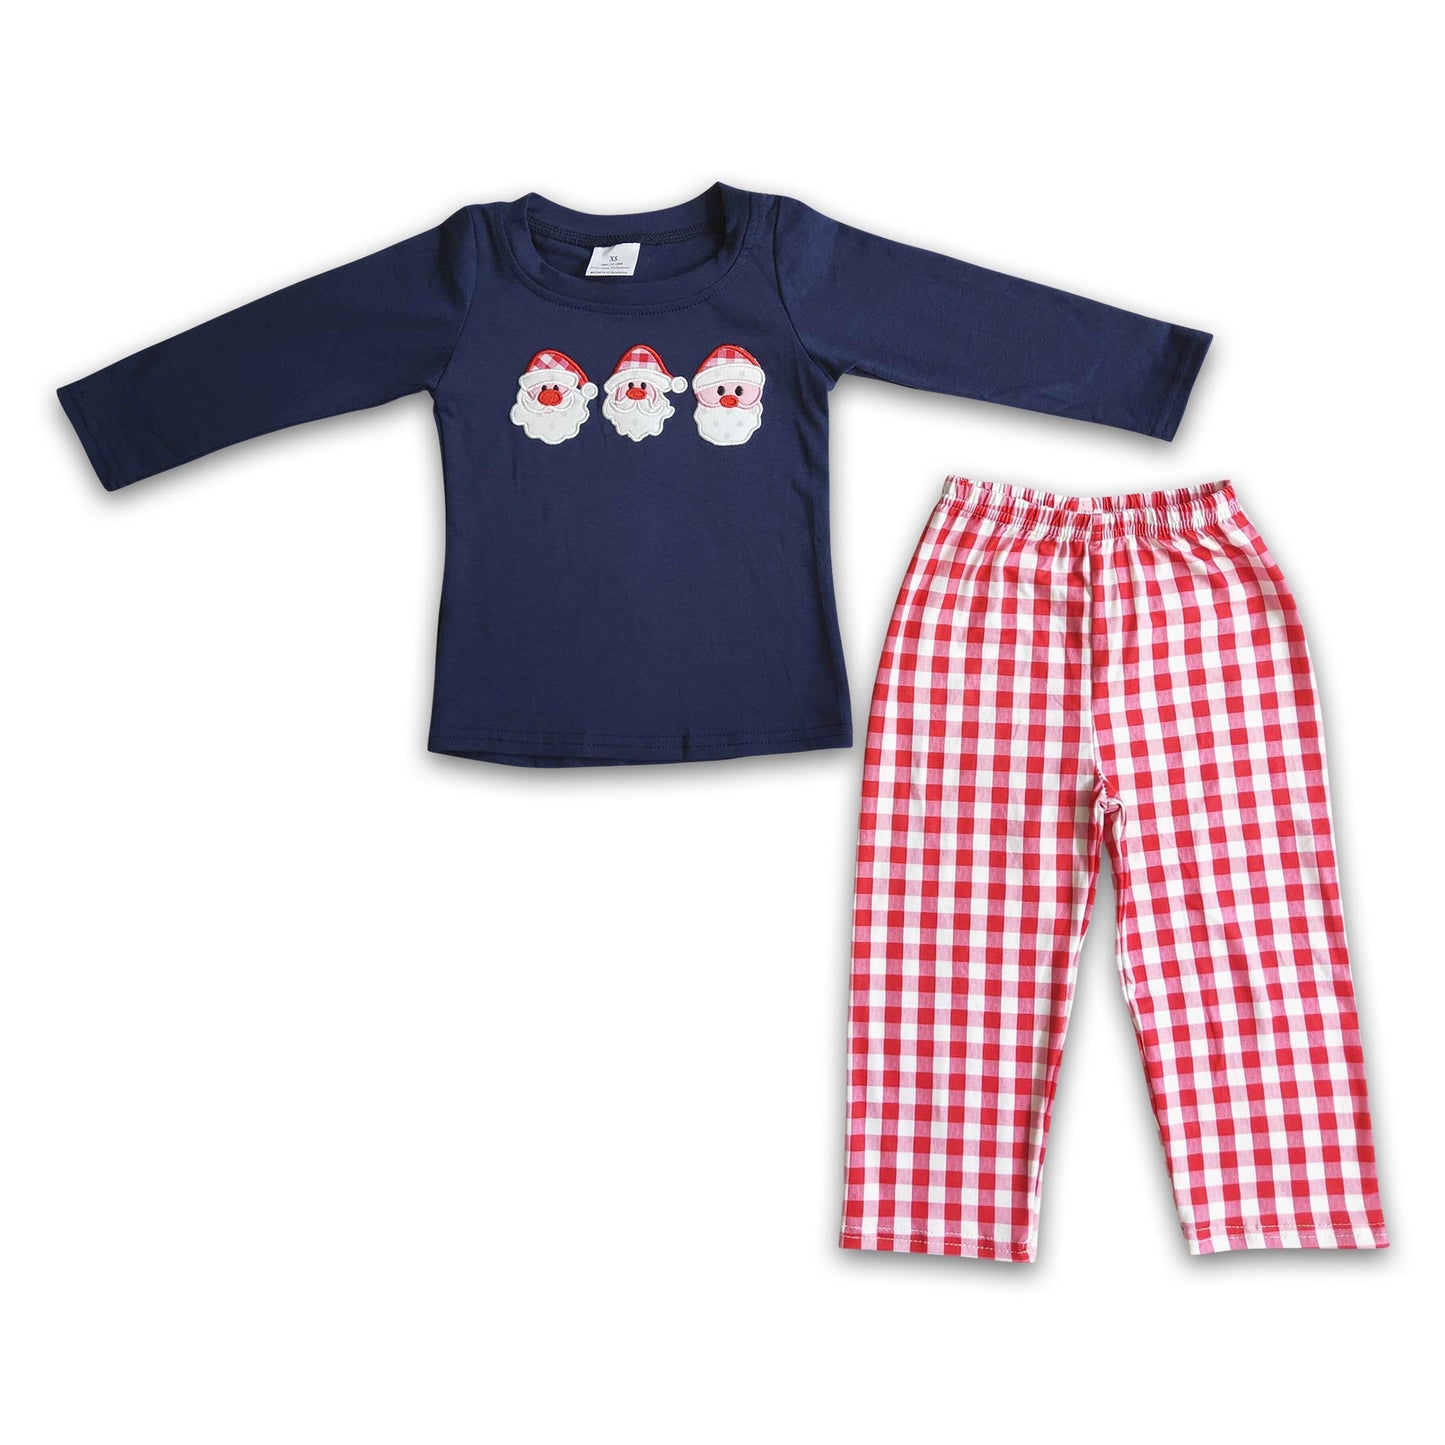 Santa embroidery navy cotton shirt plaid pants boy Christmas clothing